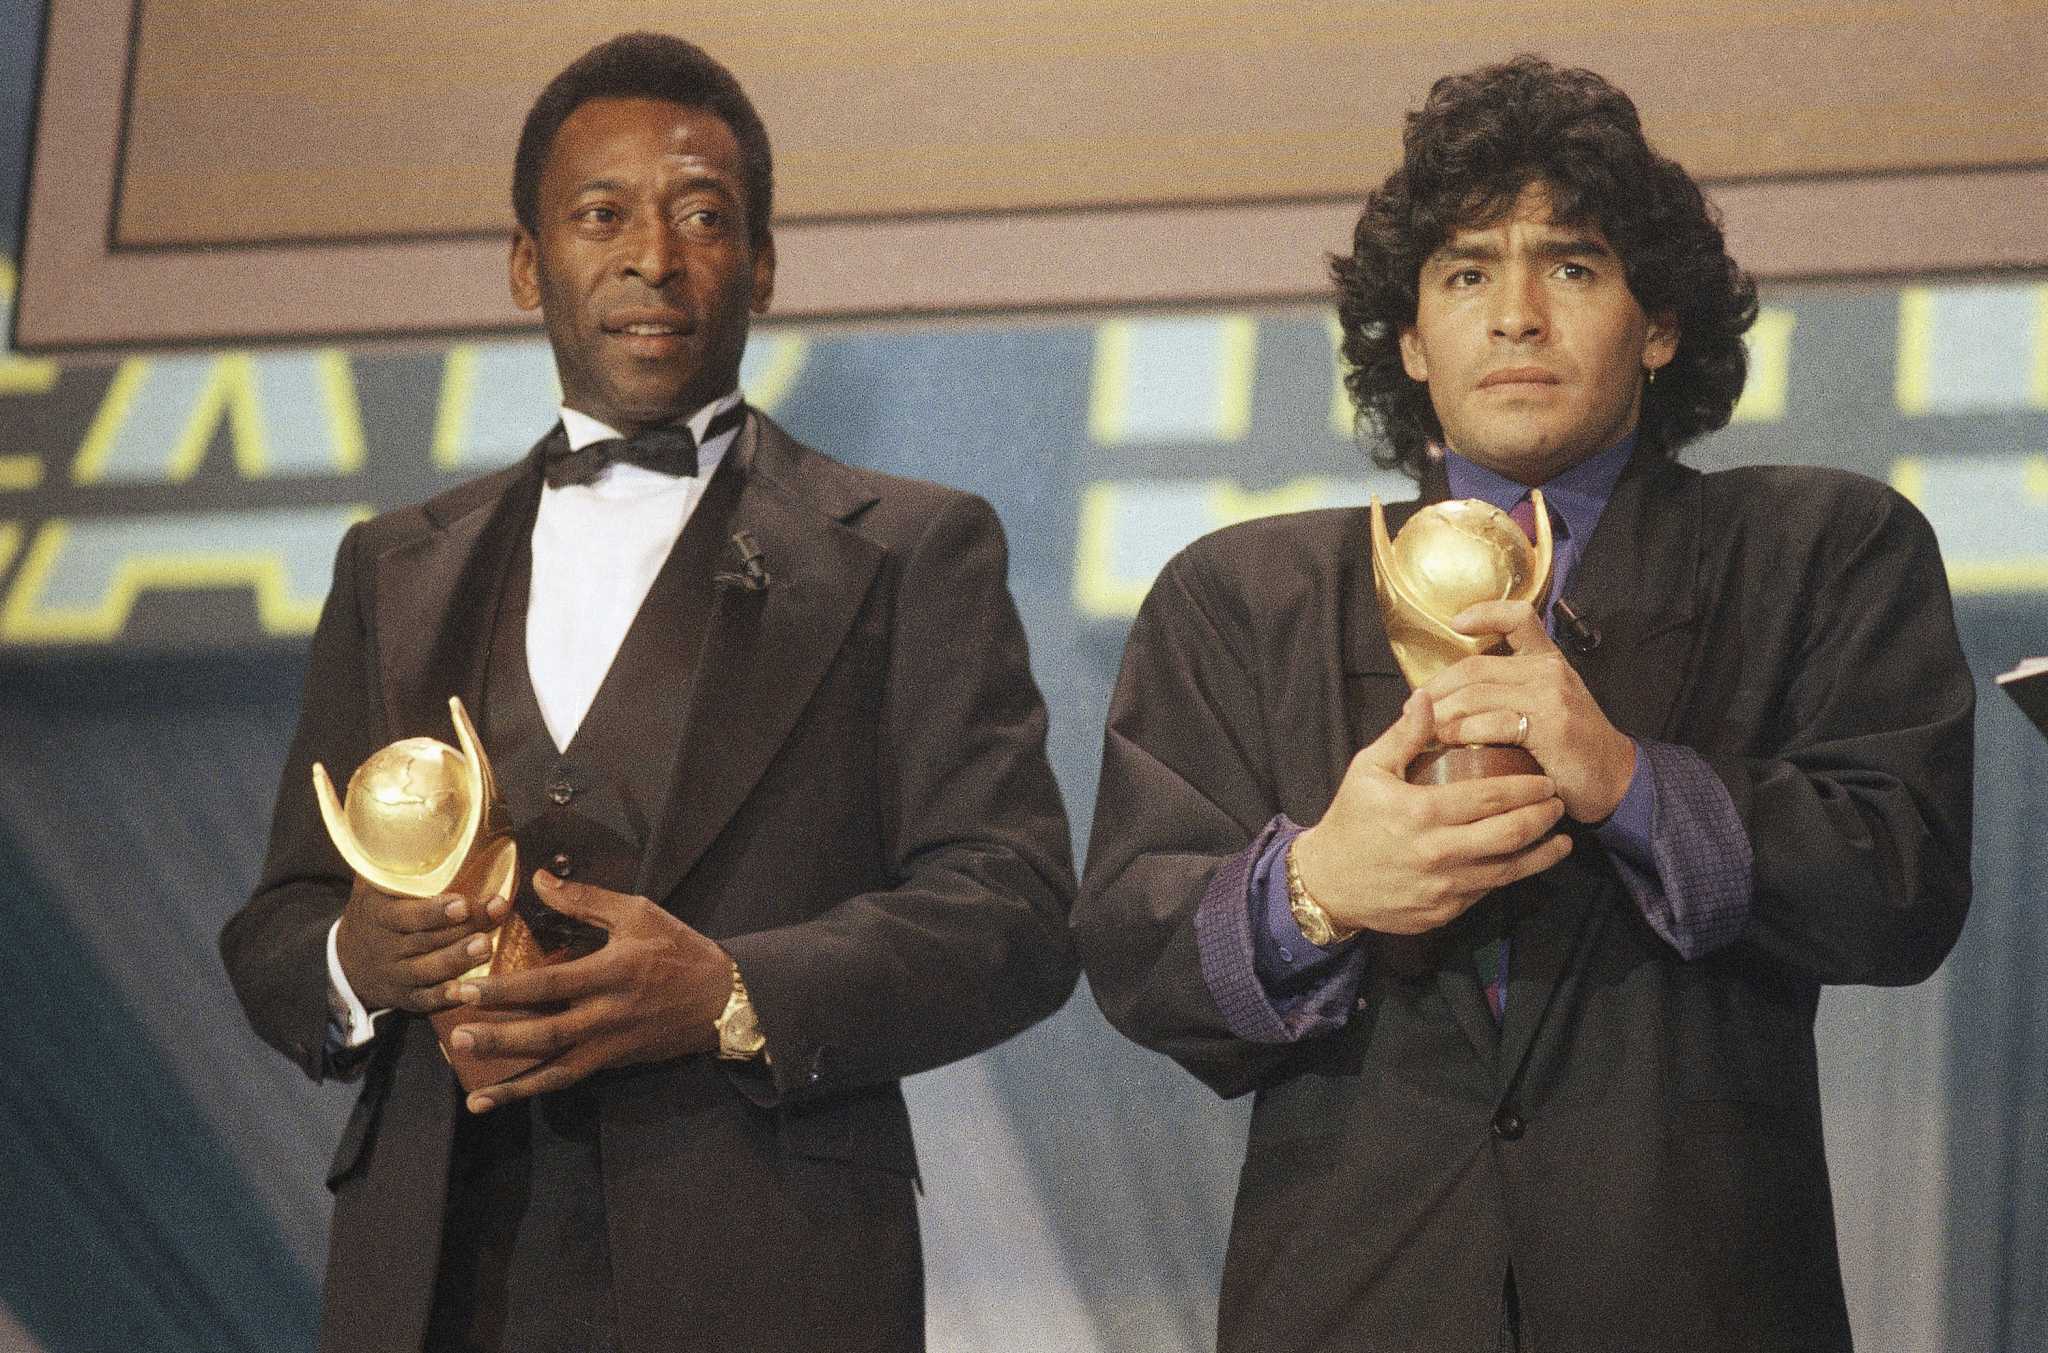 The Tragedy of Diego Maradona, One of Soccer's Greatest Stars